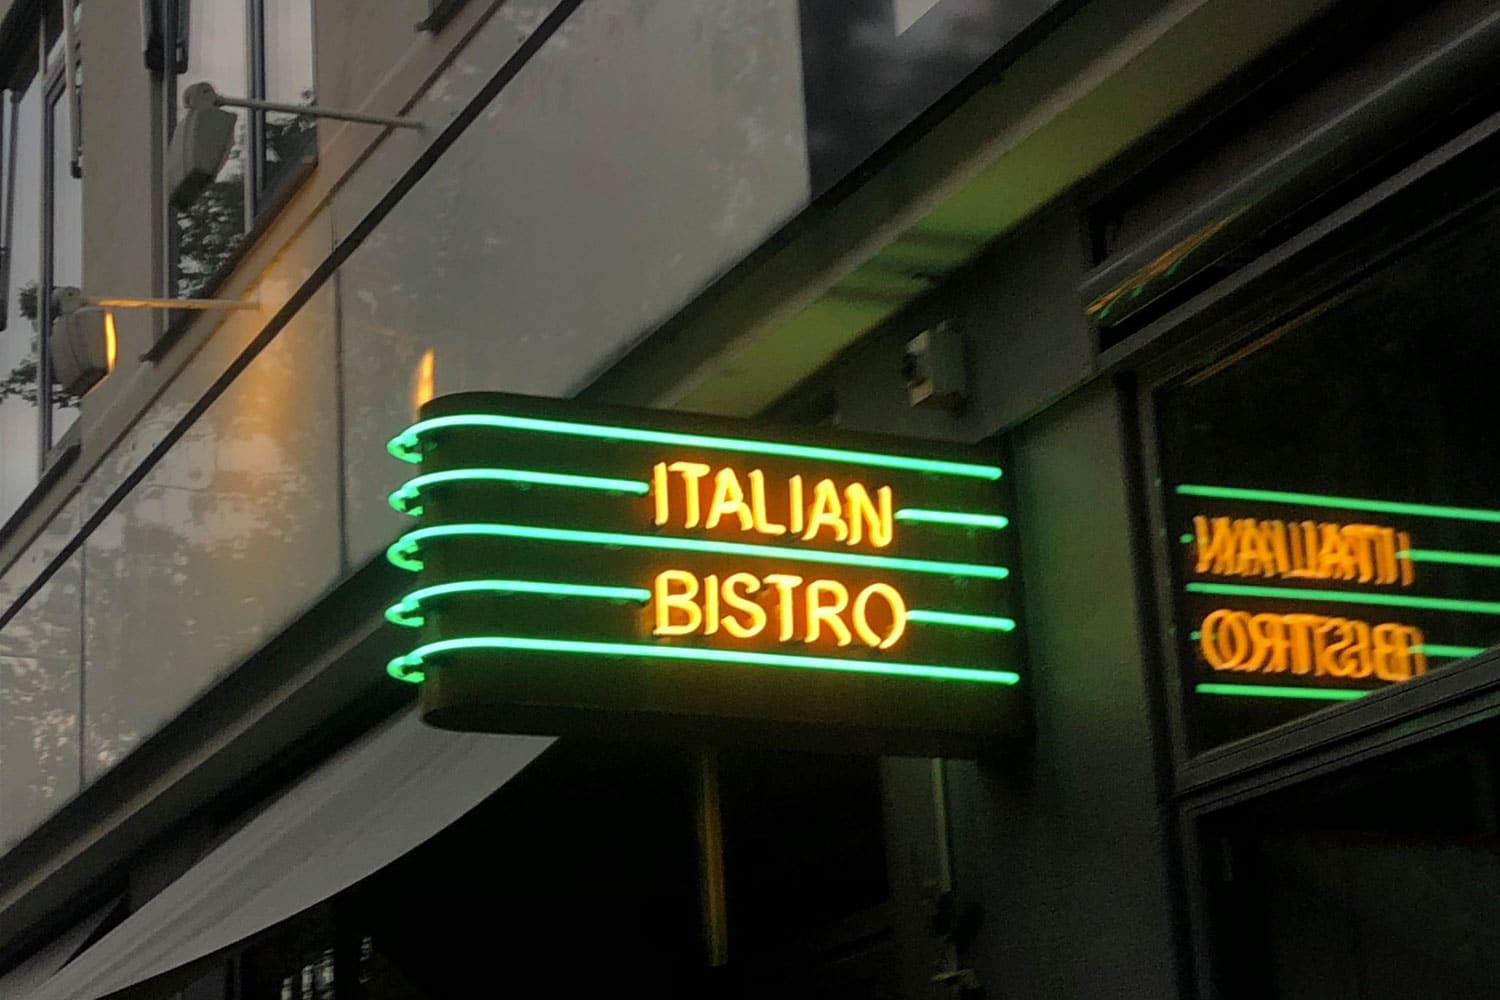 Italian Bistro